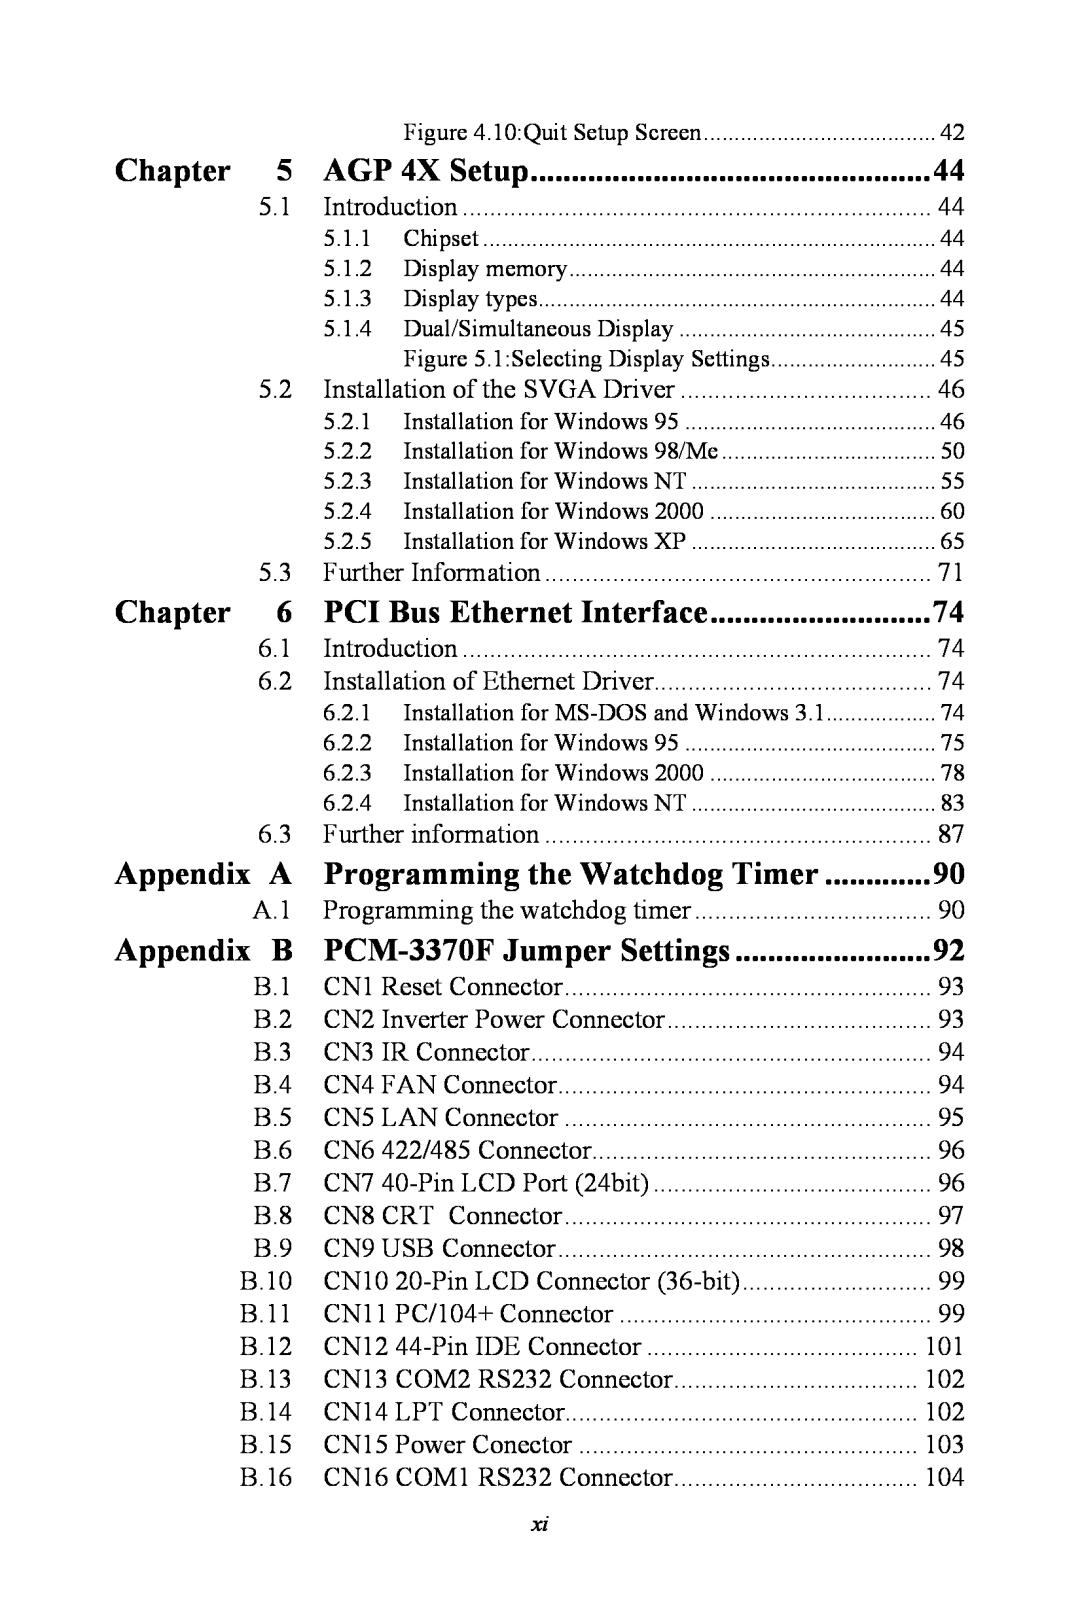 Intel PCM-3370 user manual AGP 4X Setup, PCI Bus Ethernet Interface, Appendix A, Programming the Watchdog Timer, Chapter 